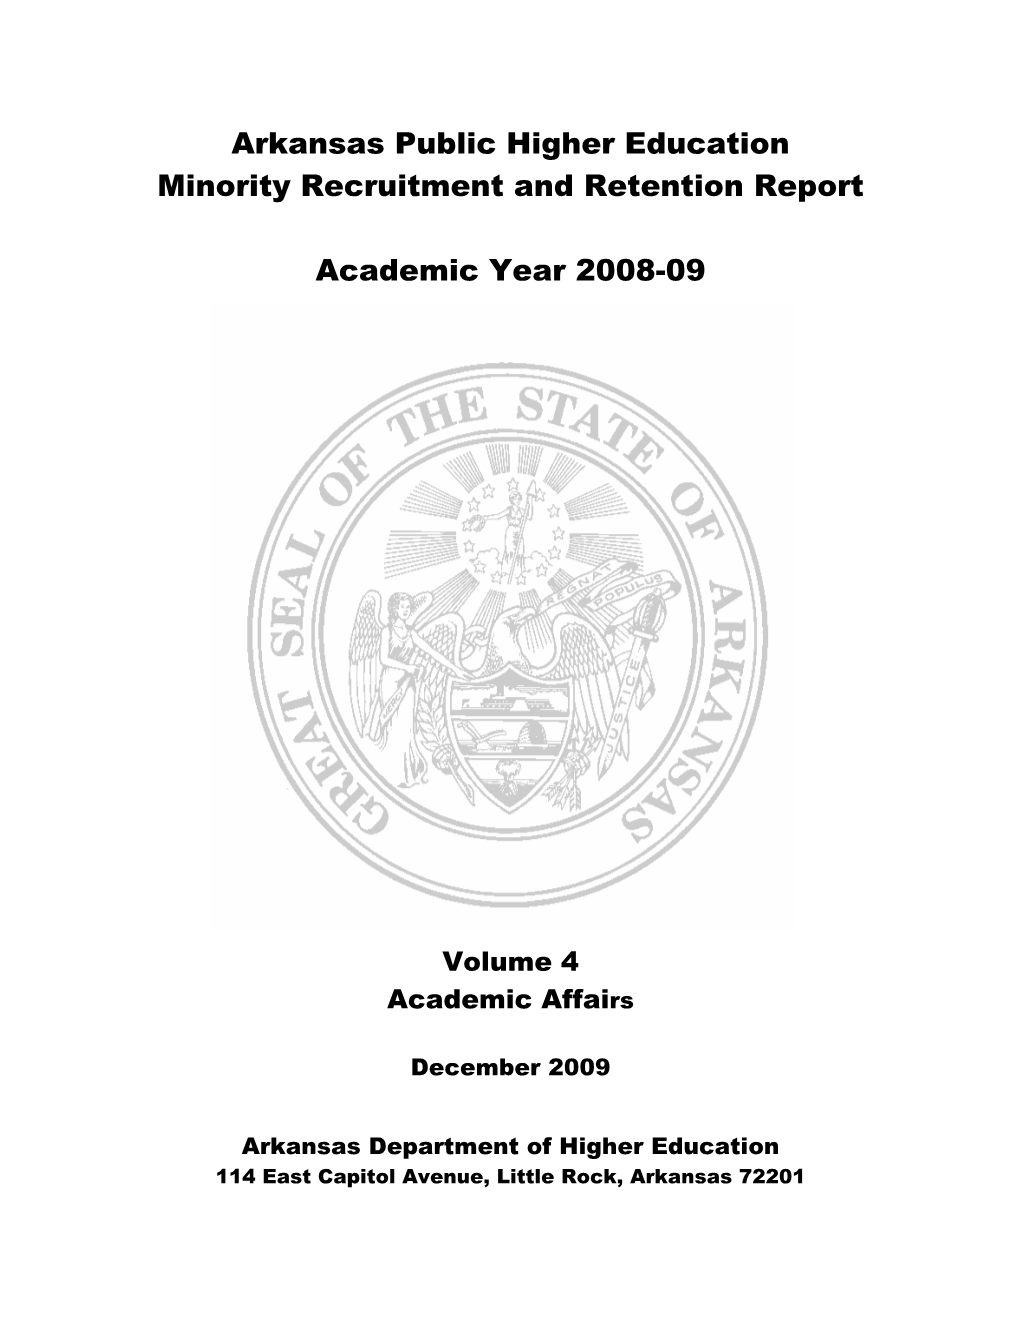 Arkansas Public Higher Education Minority Recruitment and Retention Report